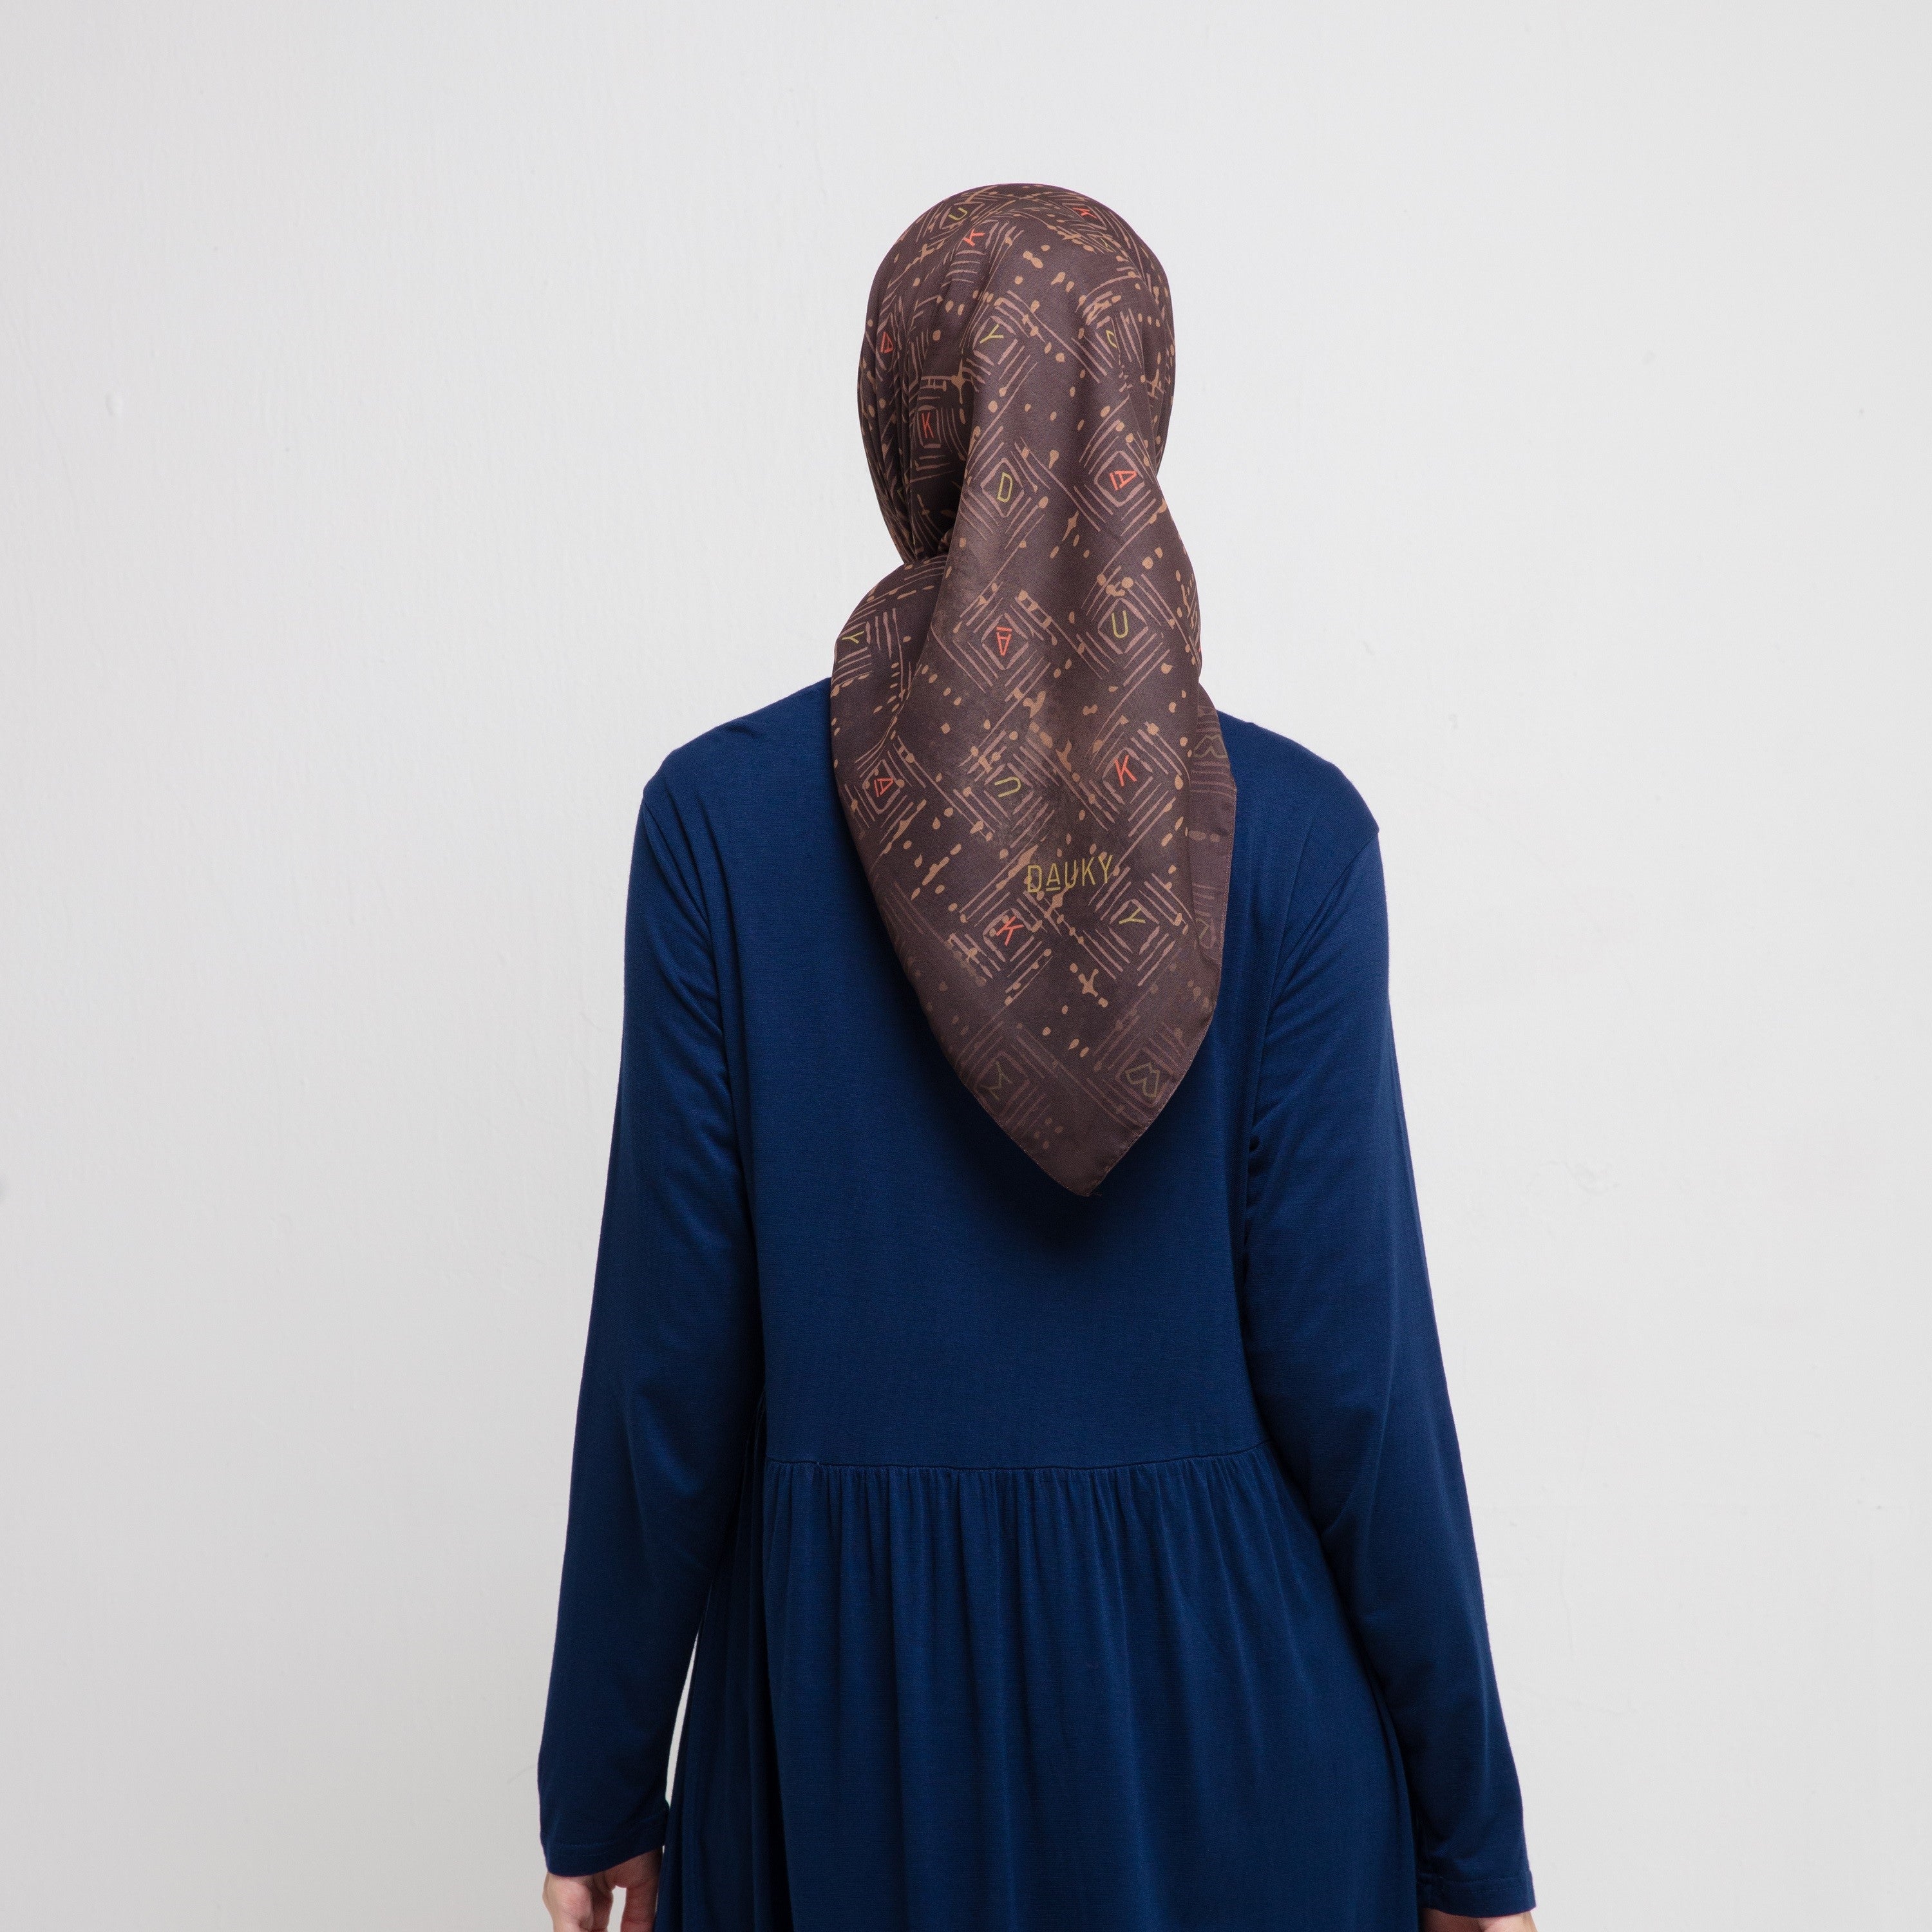 Dauky Hijab Segiempat Square Line Scarf - Coklat